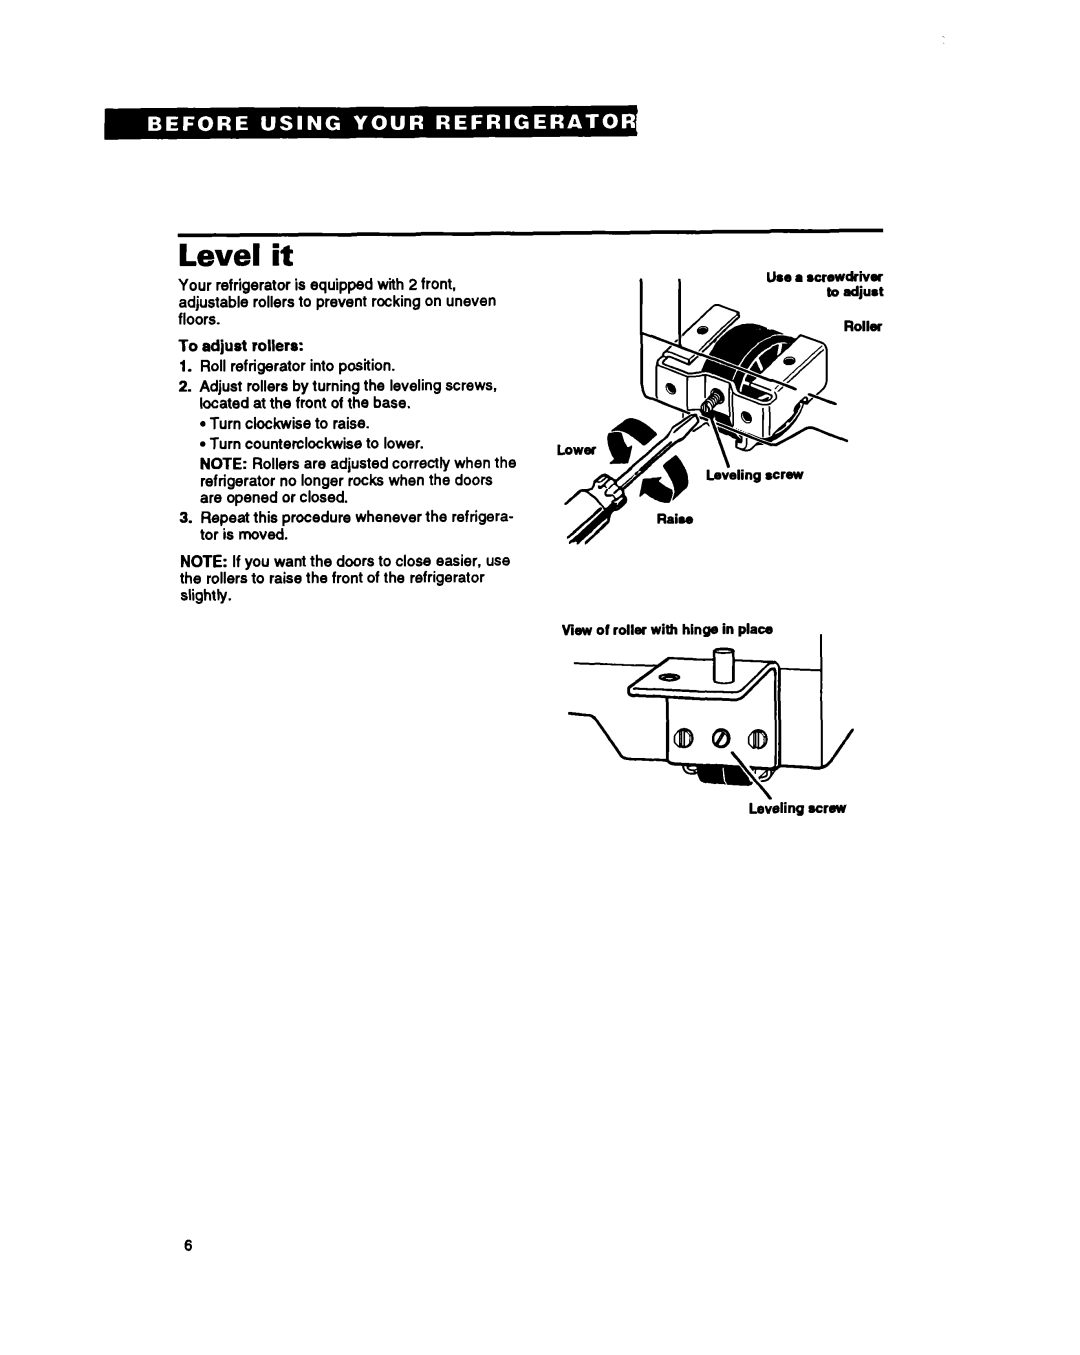 Estate TT14CK, LT14EK important safety instructions Level it, U80ascrewdrlla, toadjuot 